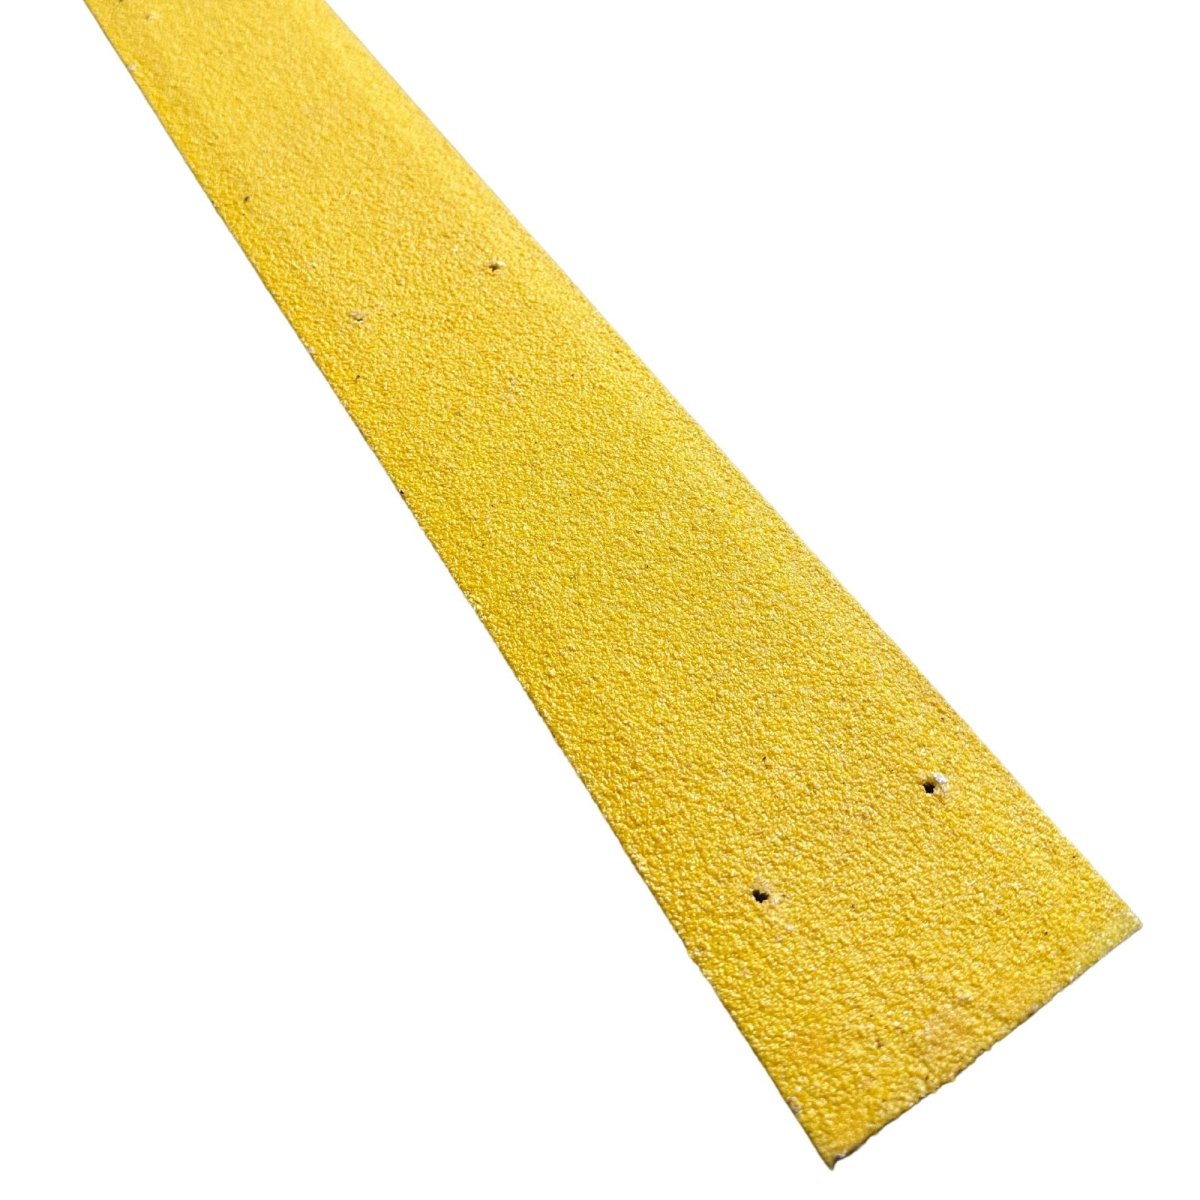 Extra Wide Non Slip Decking Strips GRP Heavy Duty Pro Grade 90mm - YELLOW - Slips Away - Decking strips - wide decking strip yellow 600mm x 90mm -